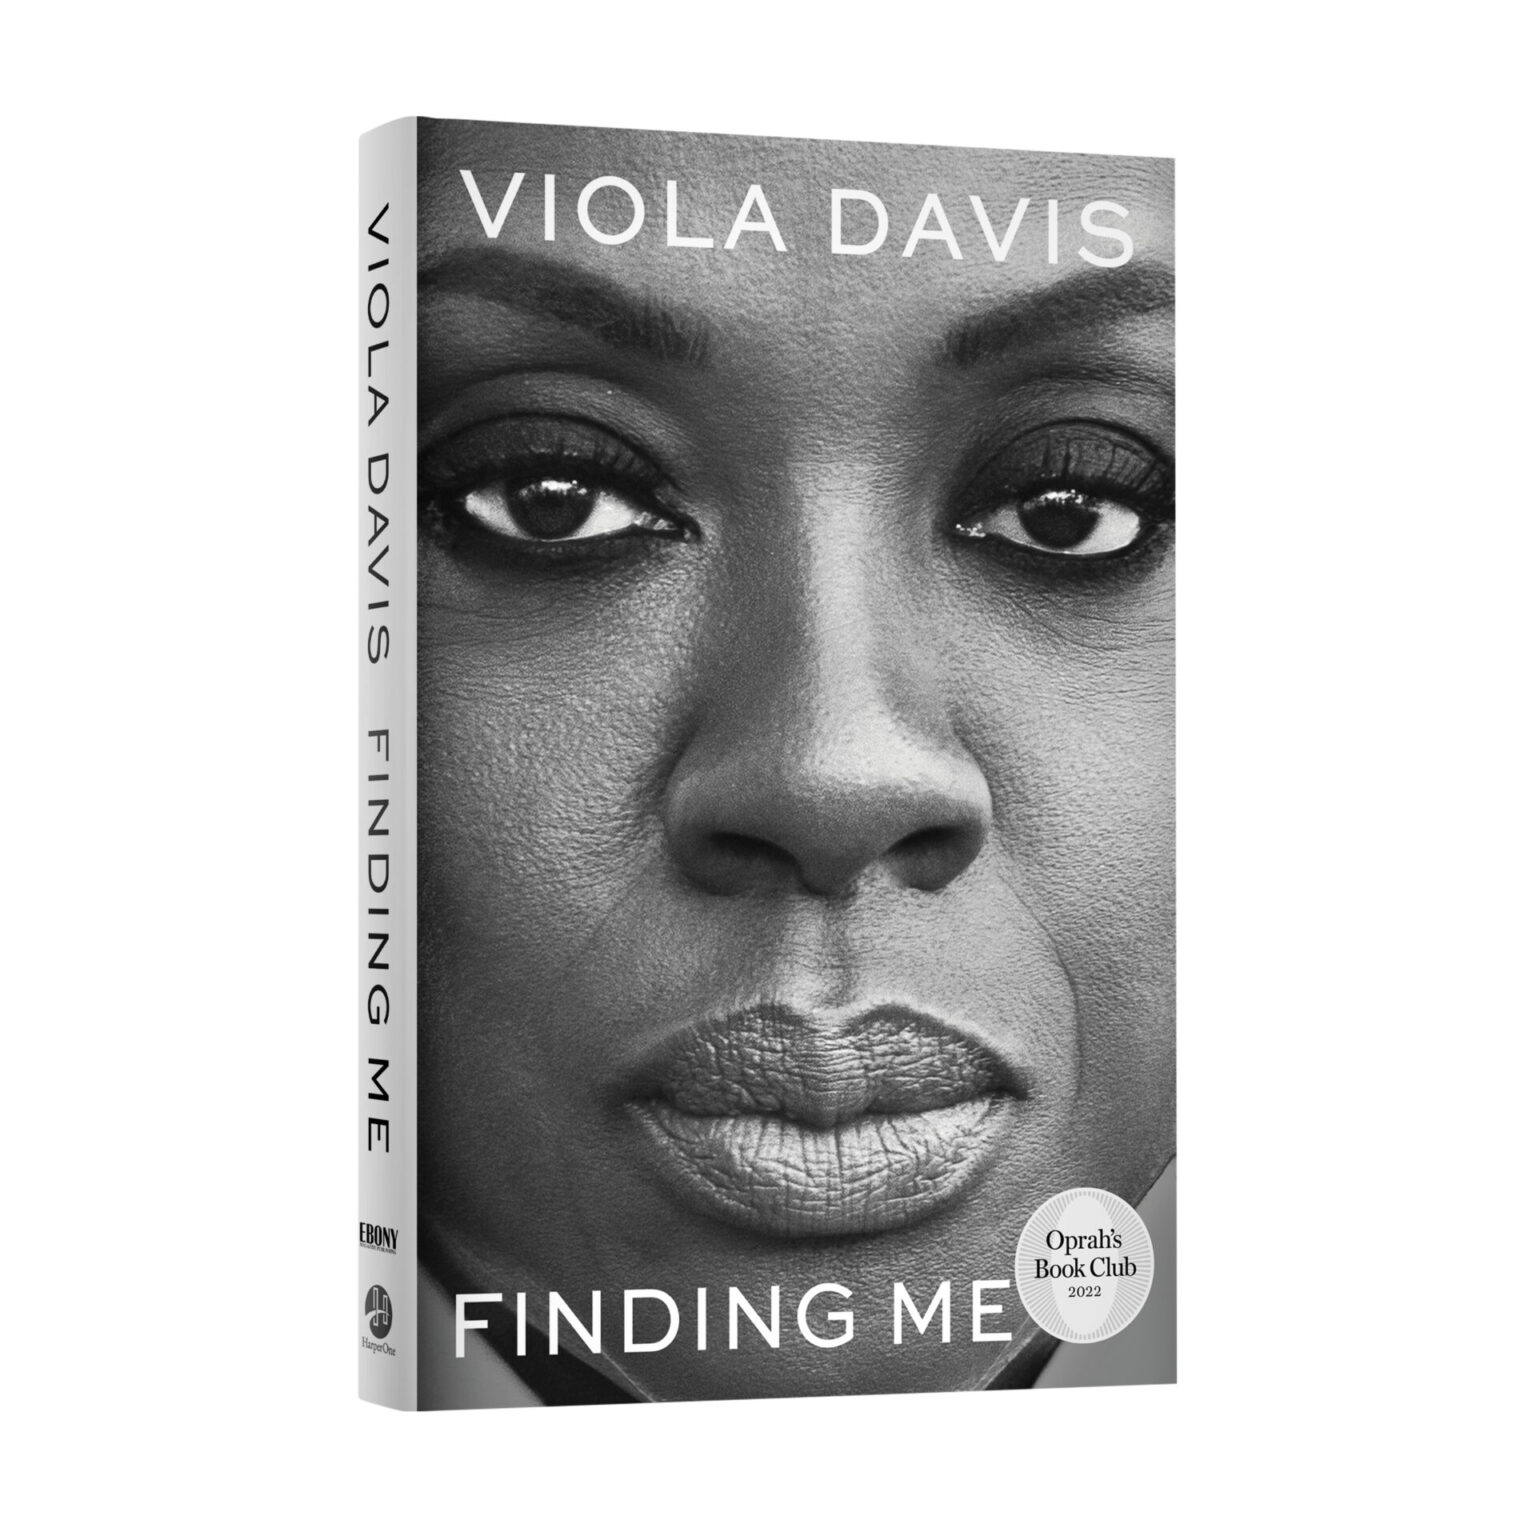 Finding Me by Viola Davis